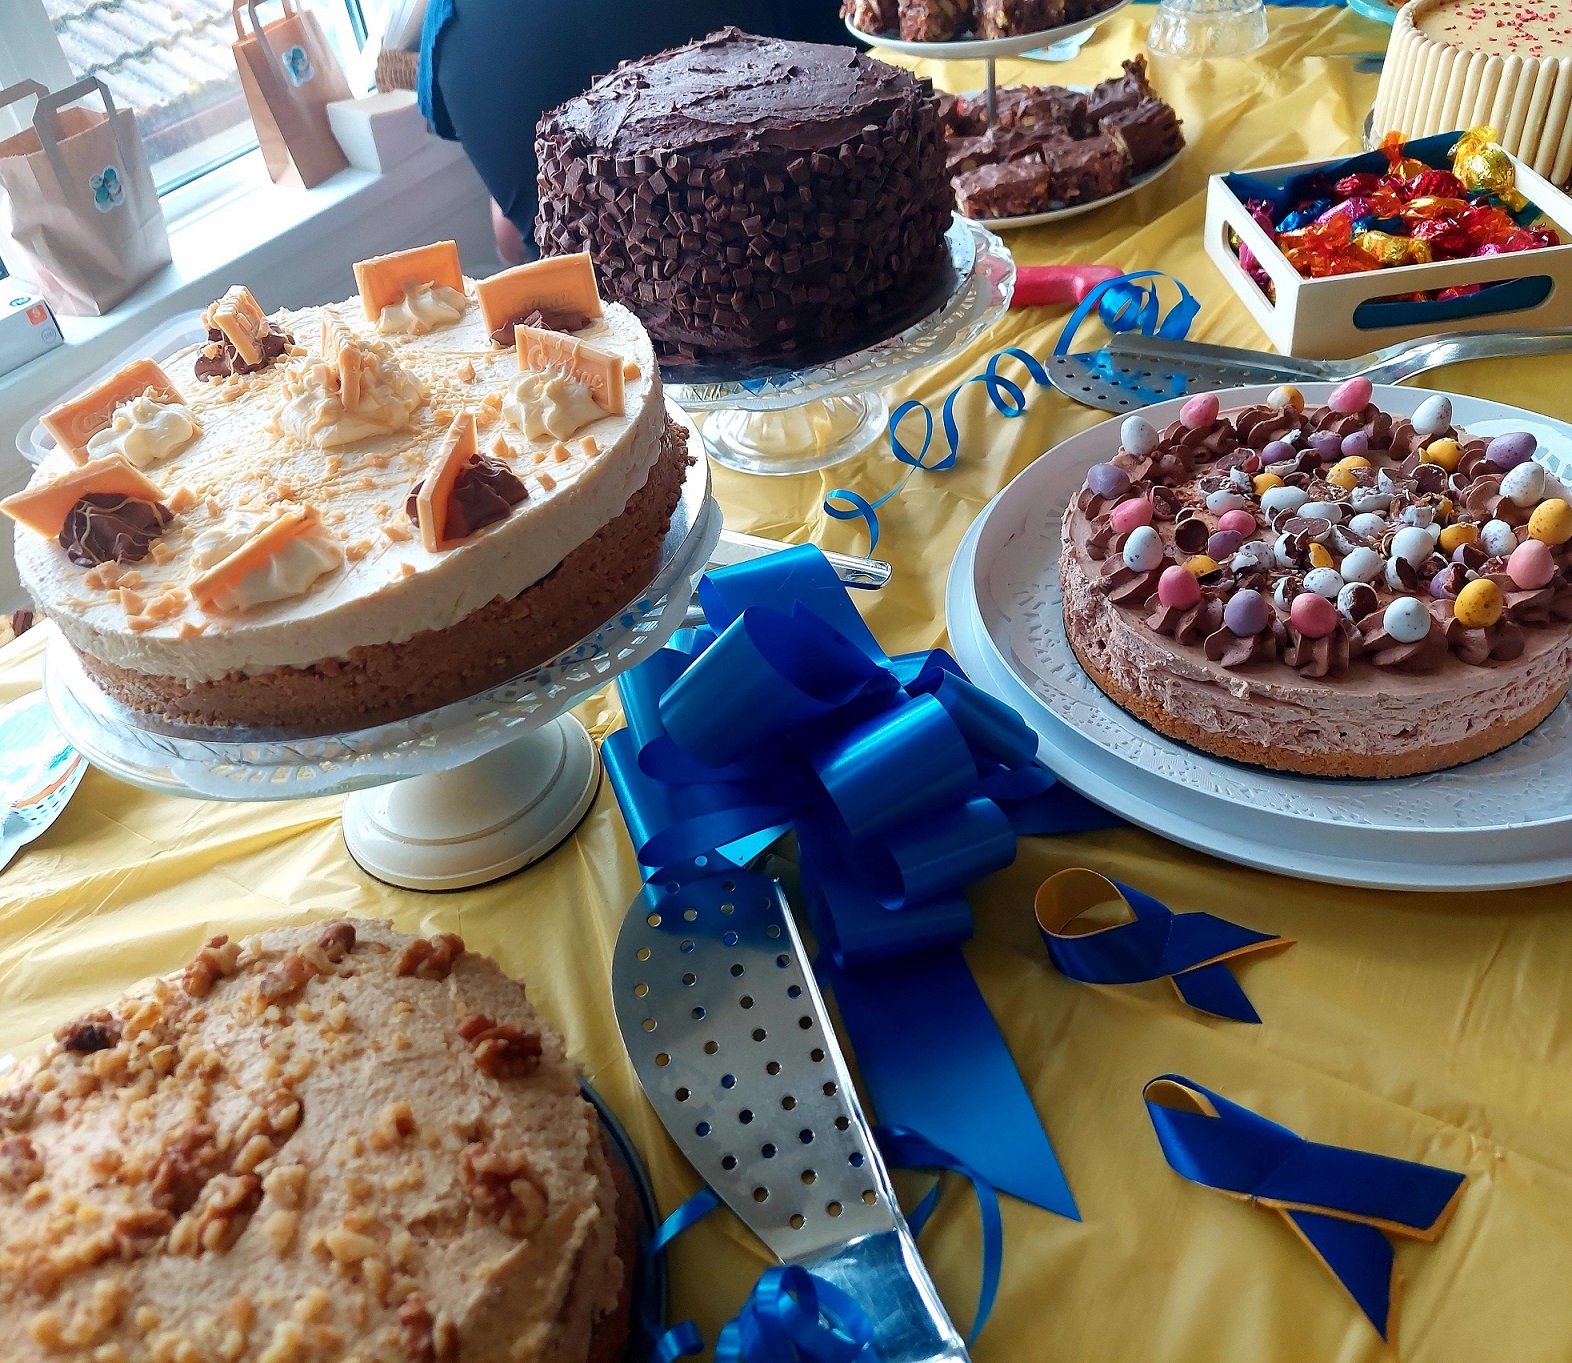 Cakes at Broadway Lodge bake sale